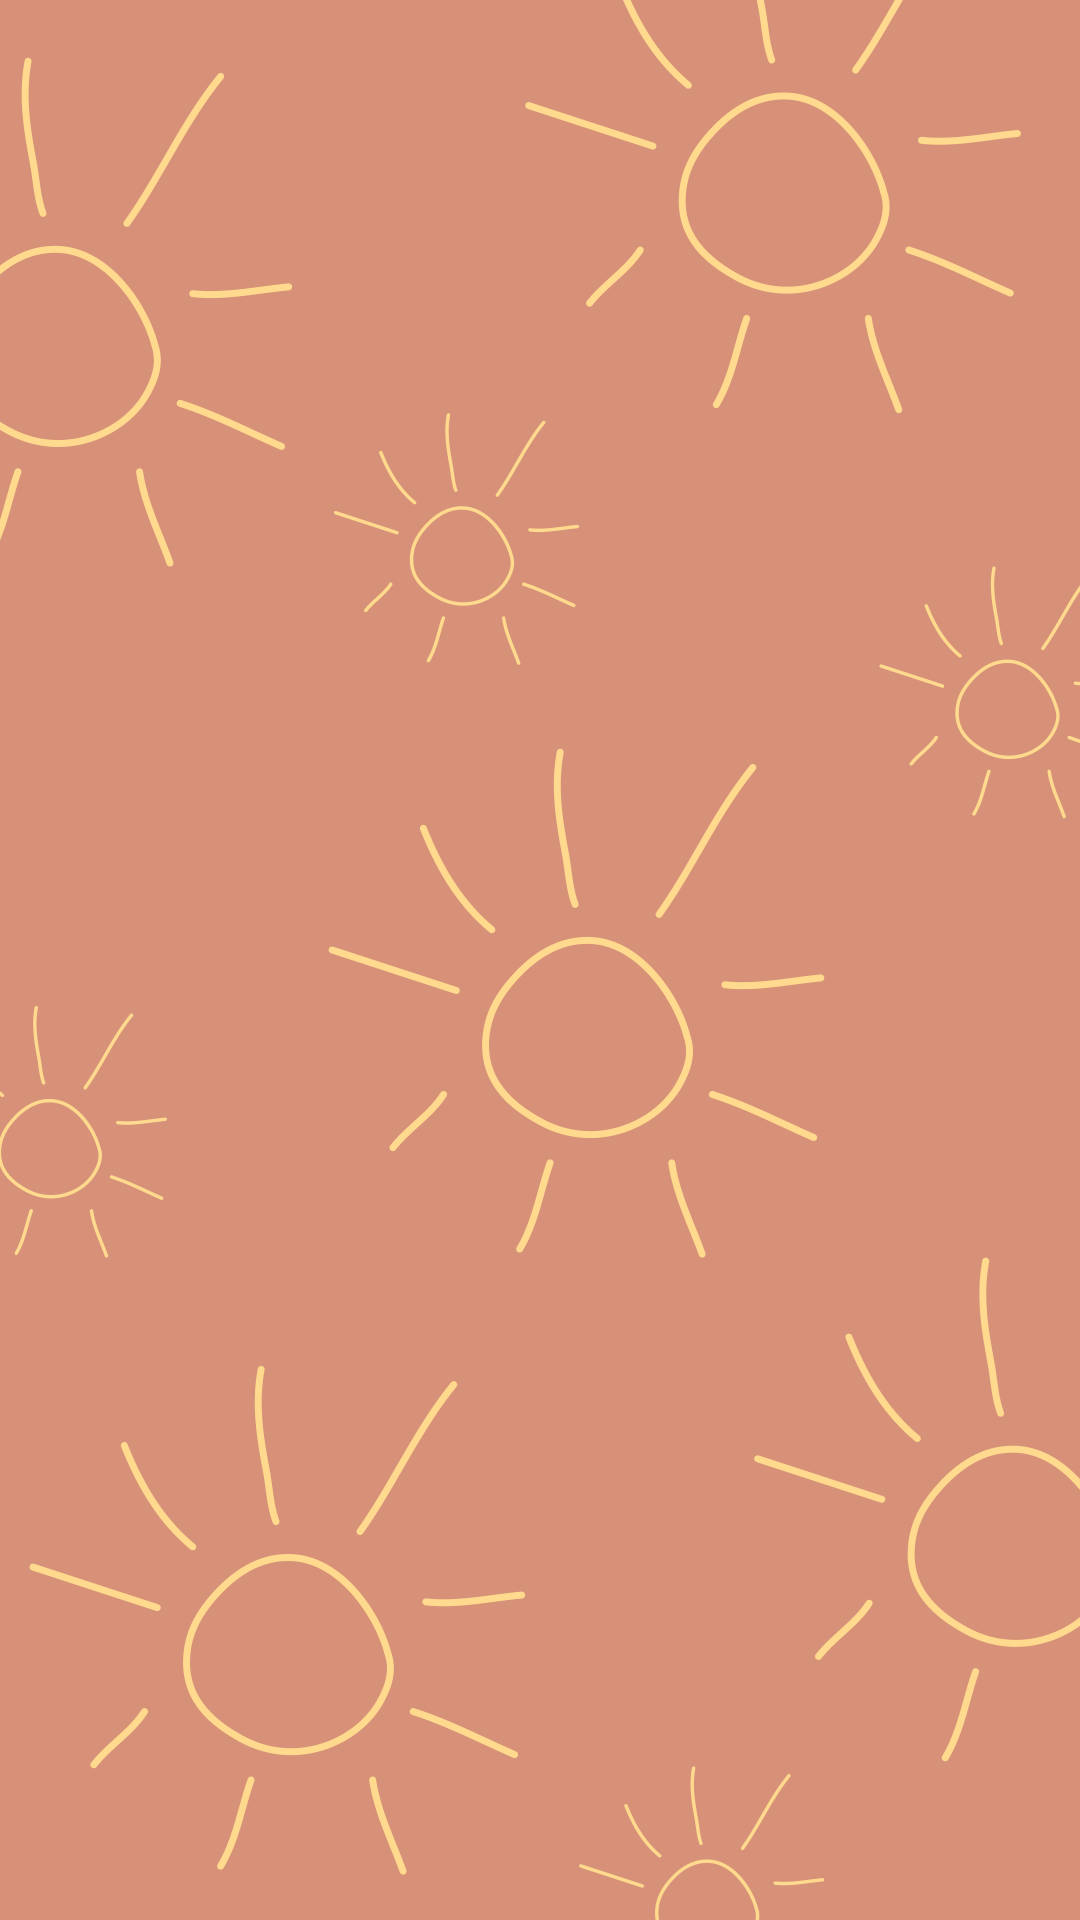 Boho Aesthetic Sun Outline Doodle Background